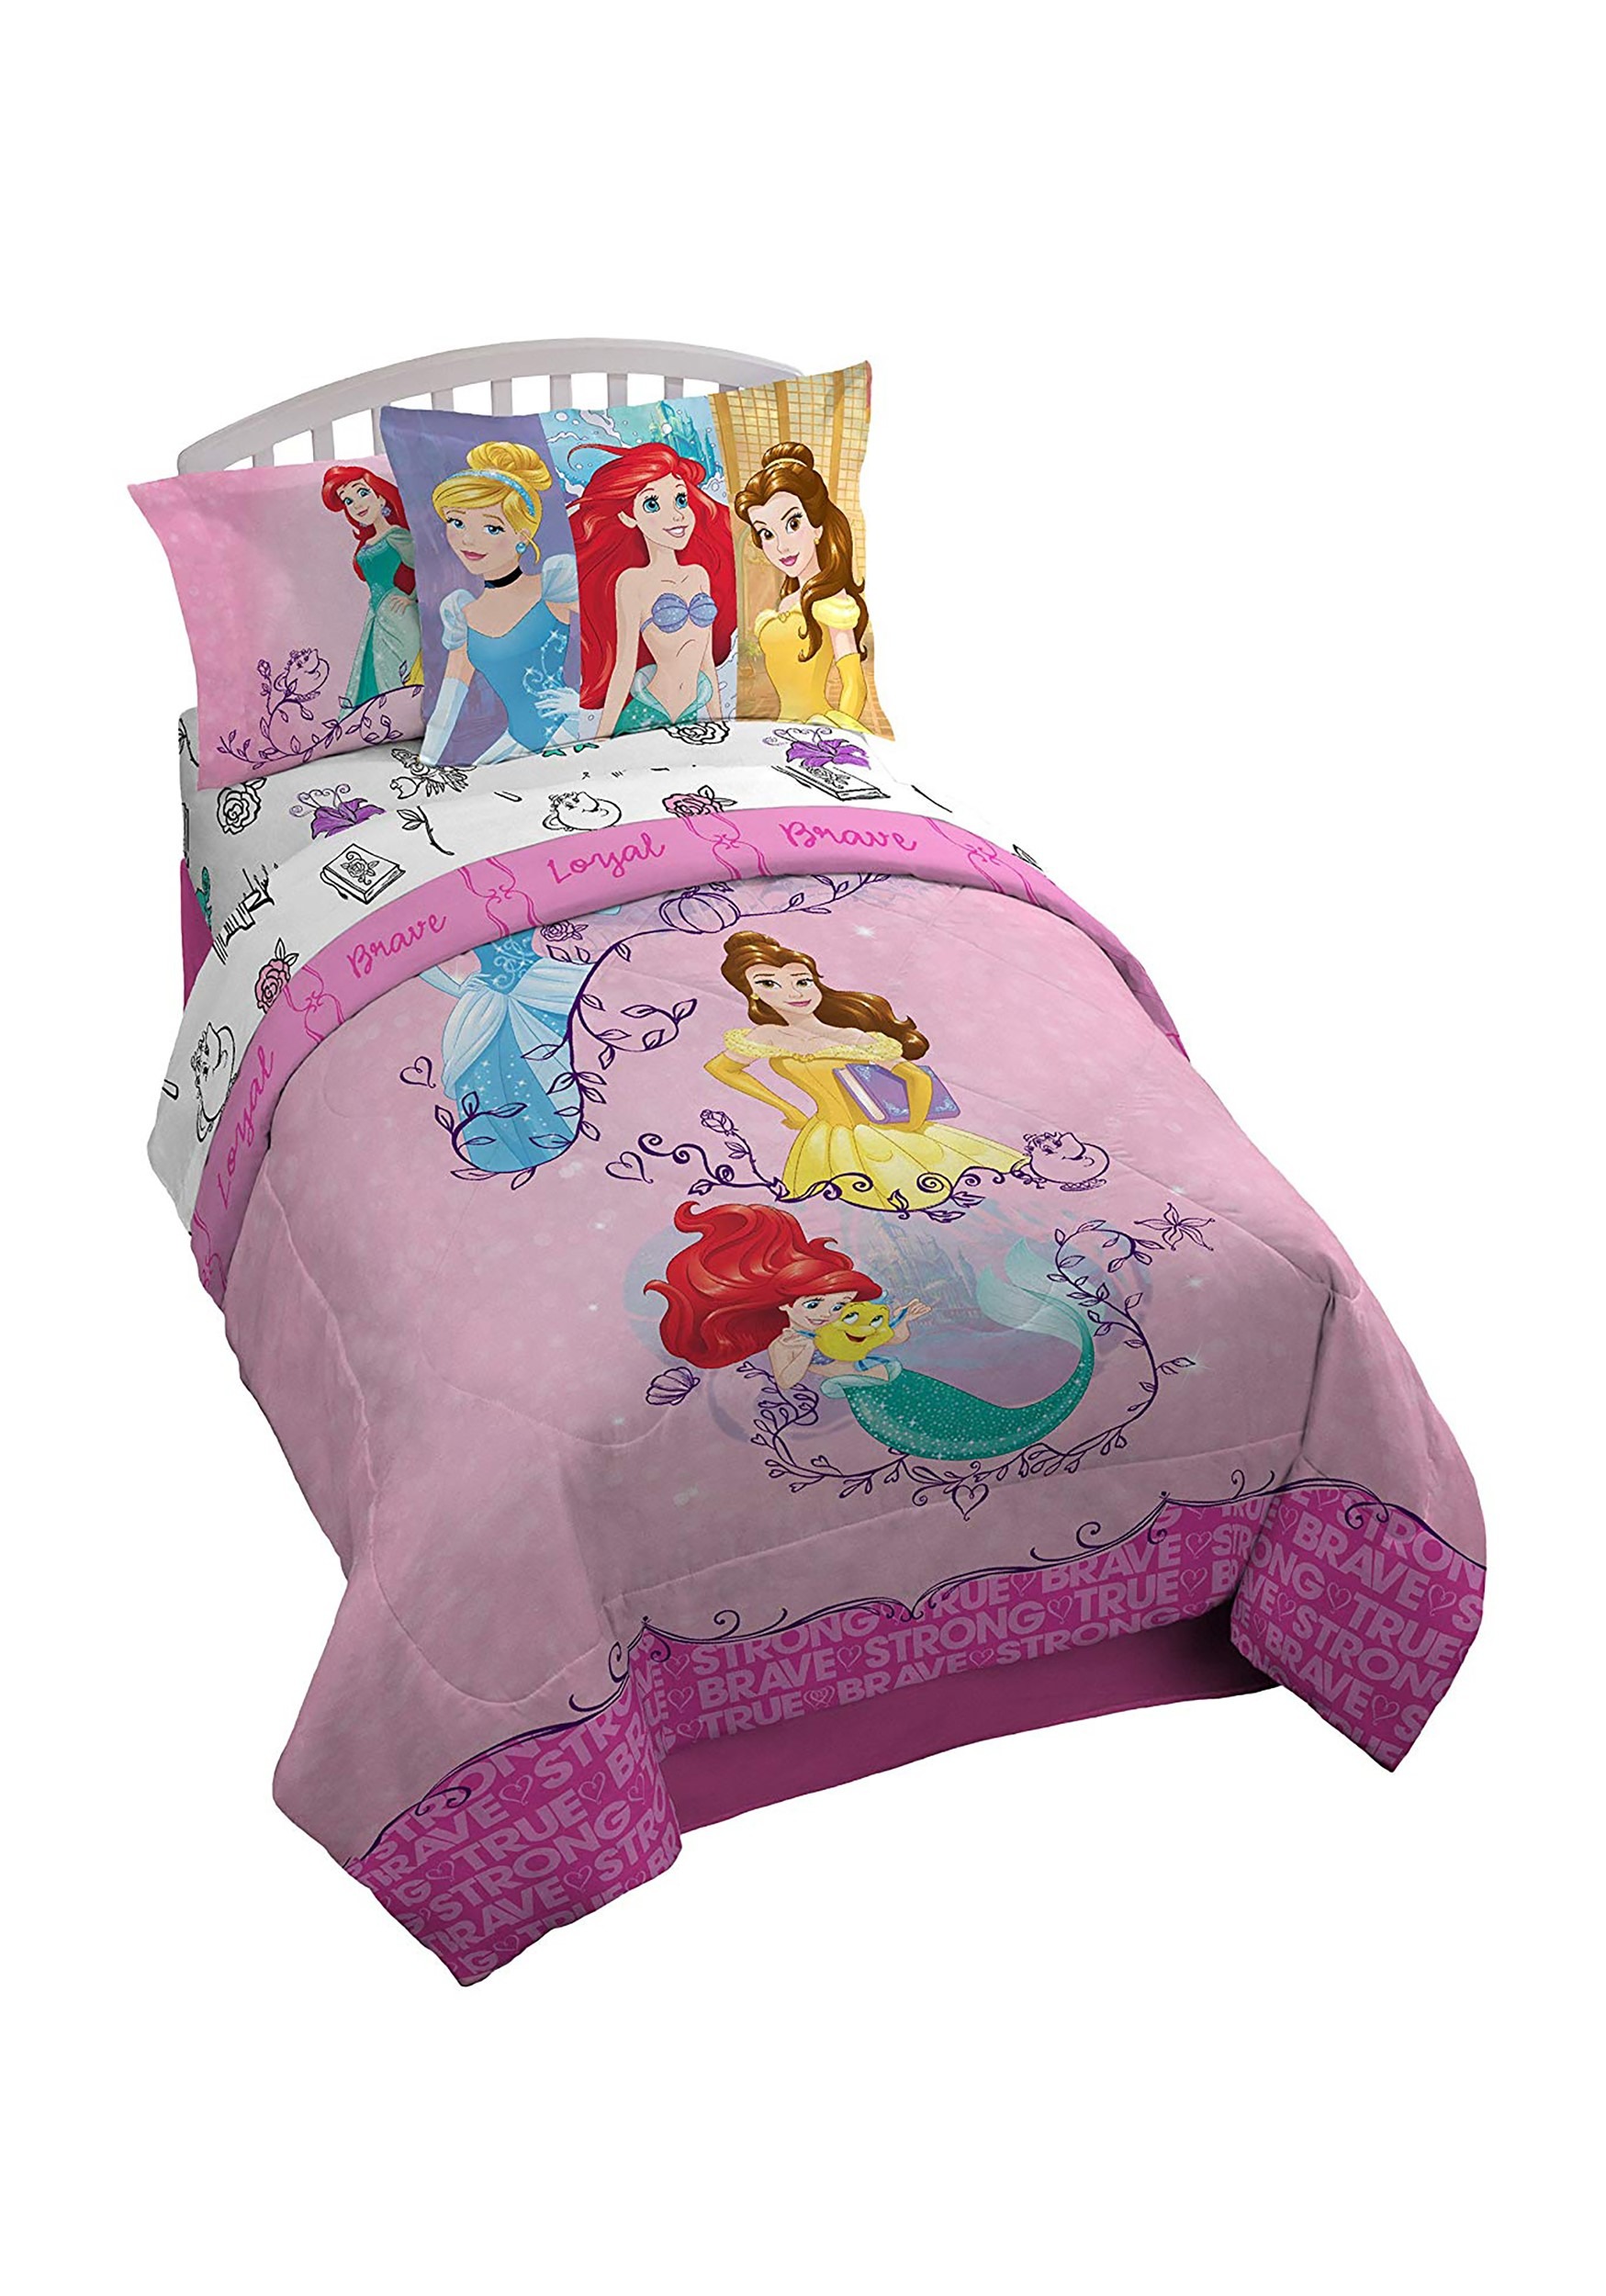 Disney Princess Friendship Adventure, Power Ranger Twin Bed In A Bag